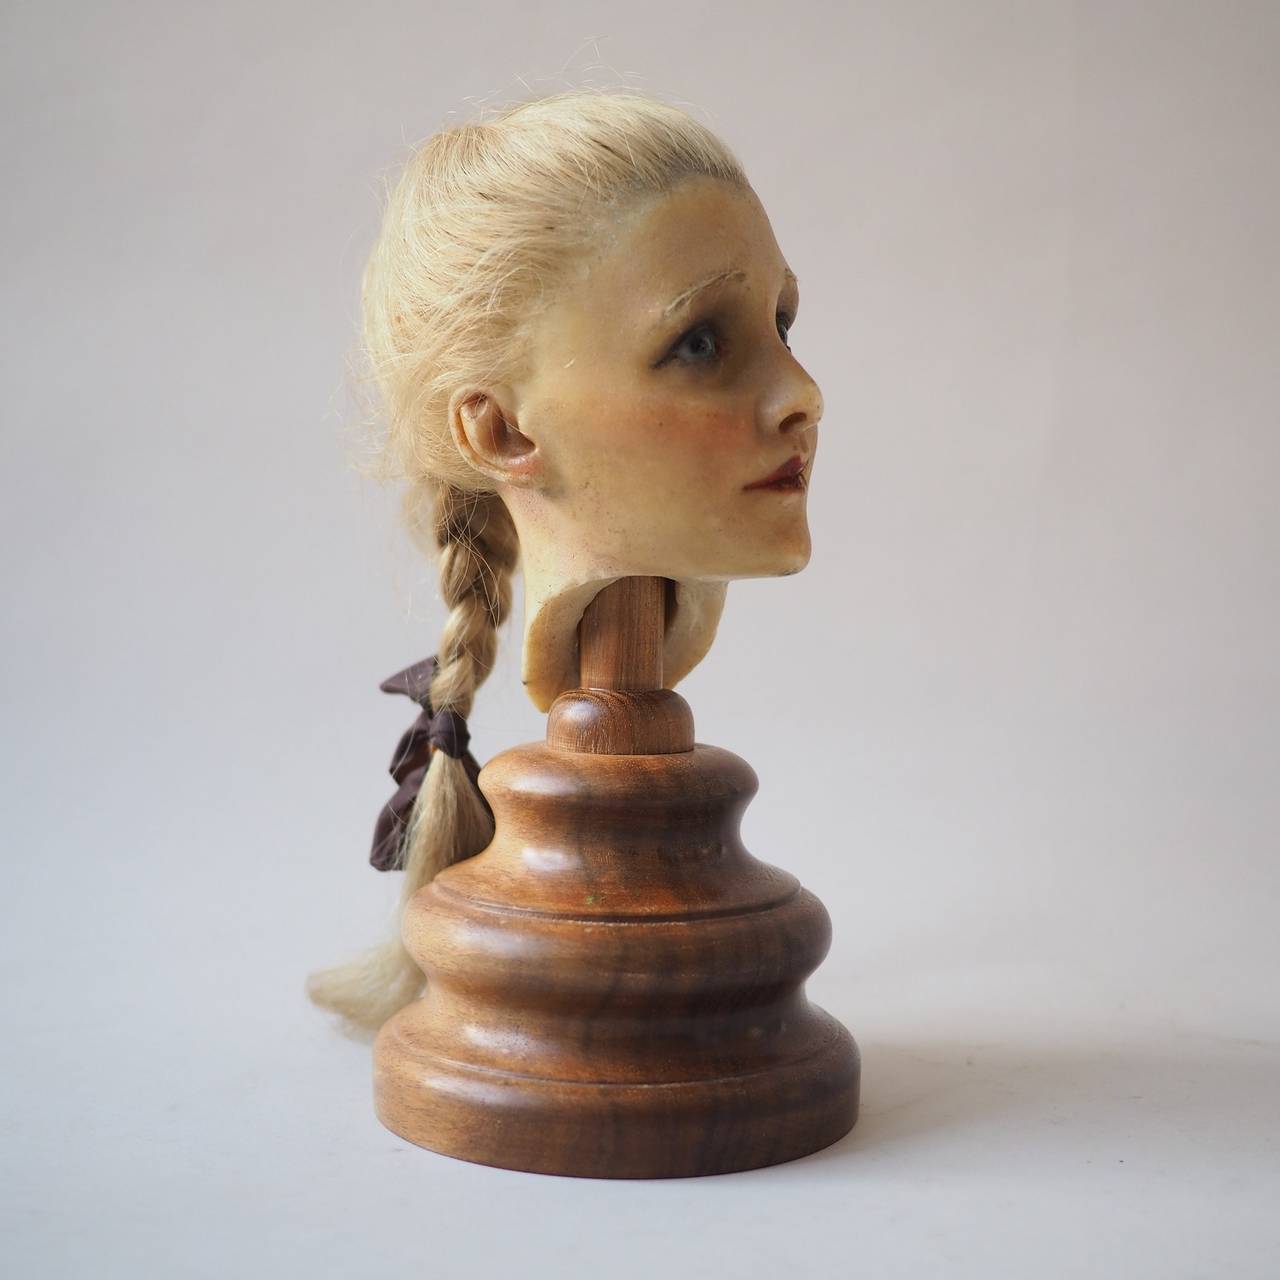 Edwardian Early 20th Century Wax Model of a Girl's Head